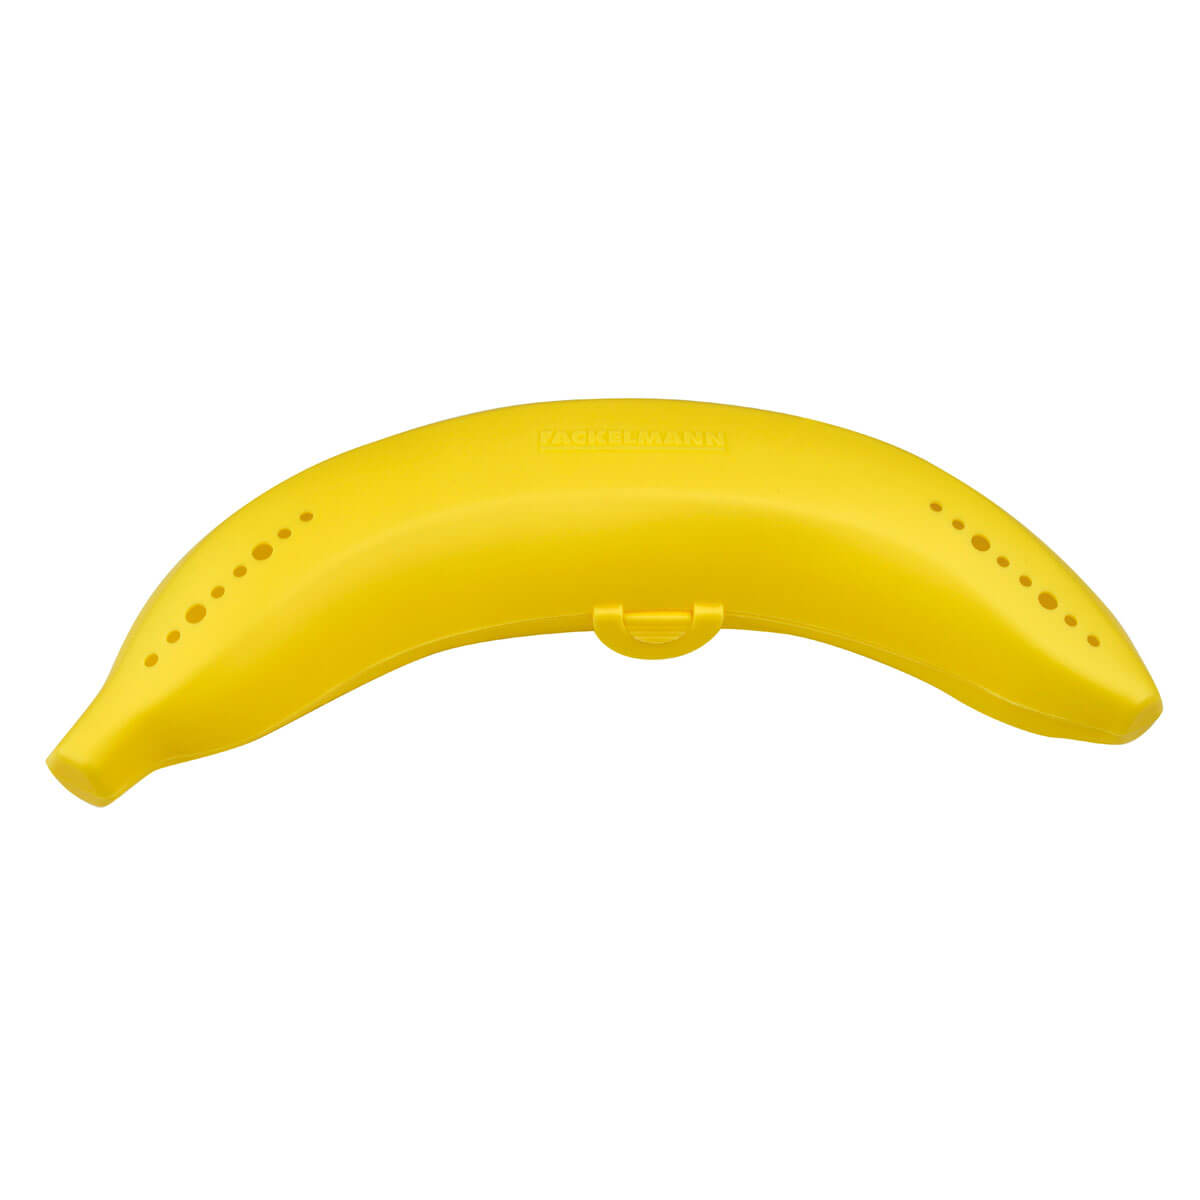 Bananenbox